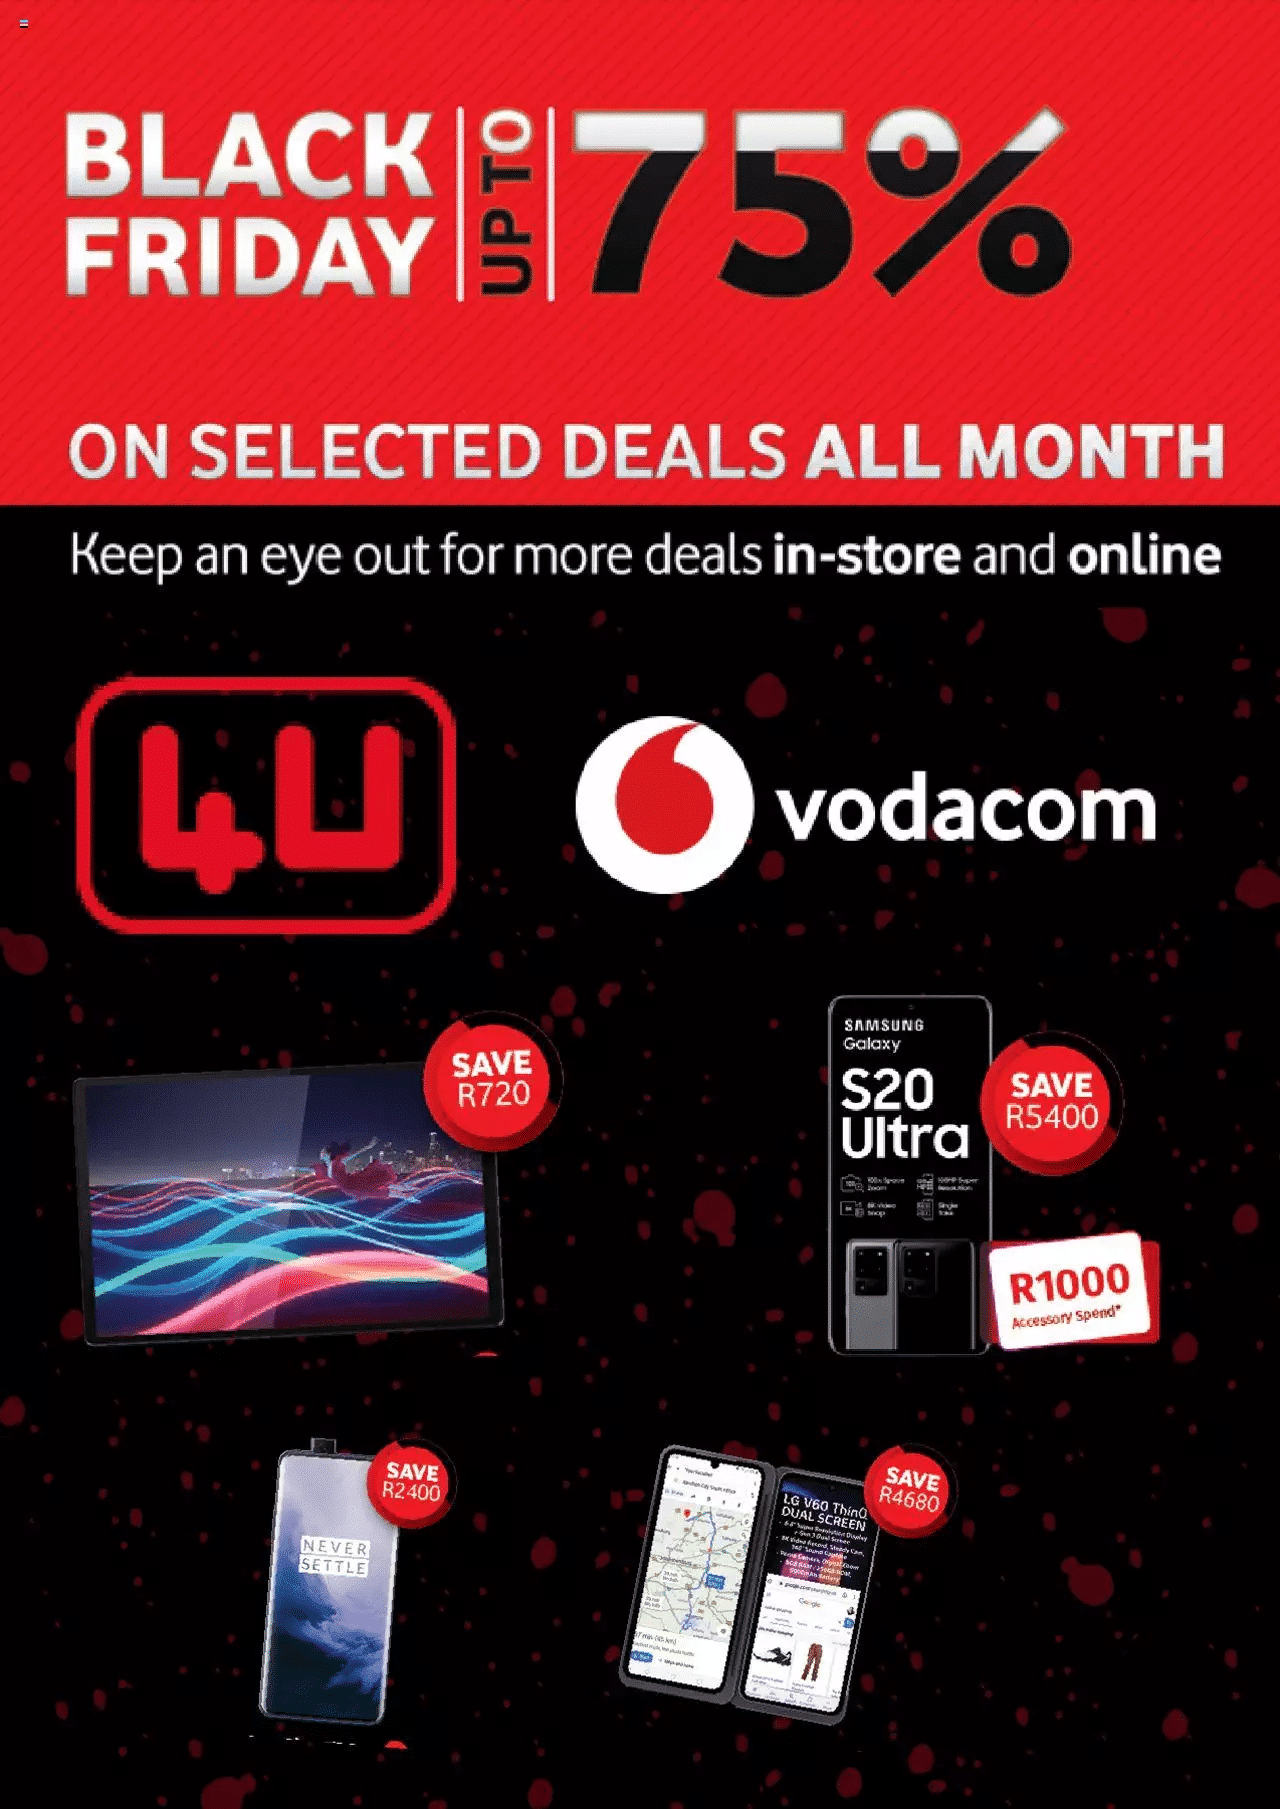 Vodacom Black Friday Deals & Specials 2021 - When Do Att Black Friday Deals End